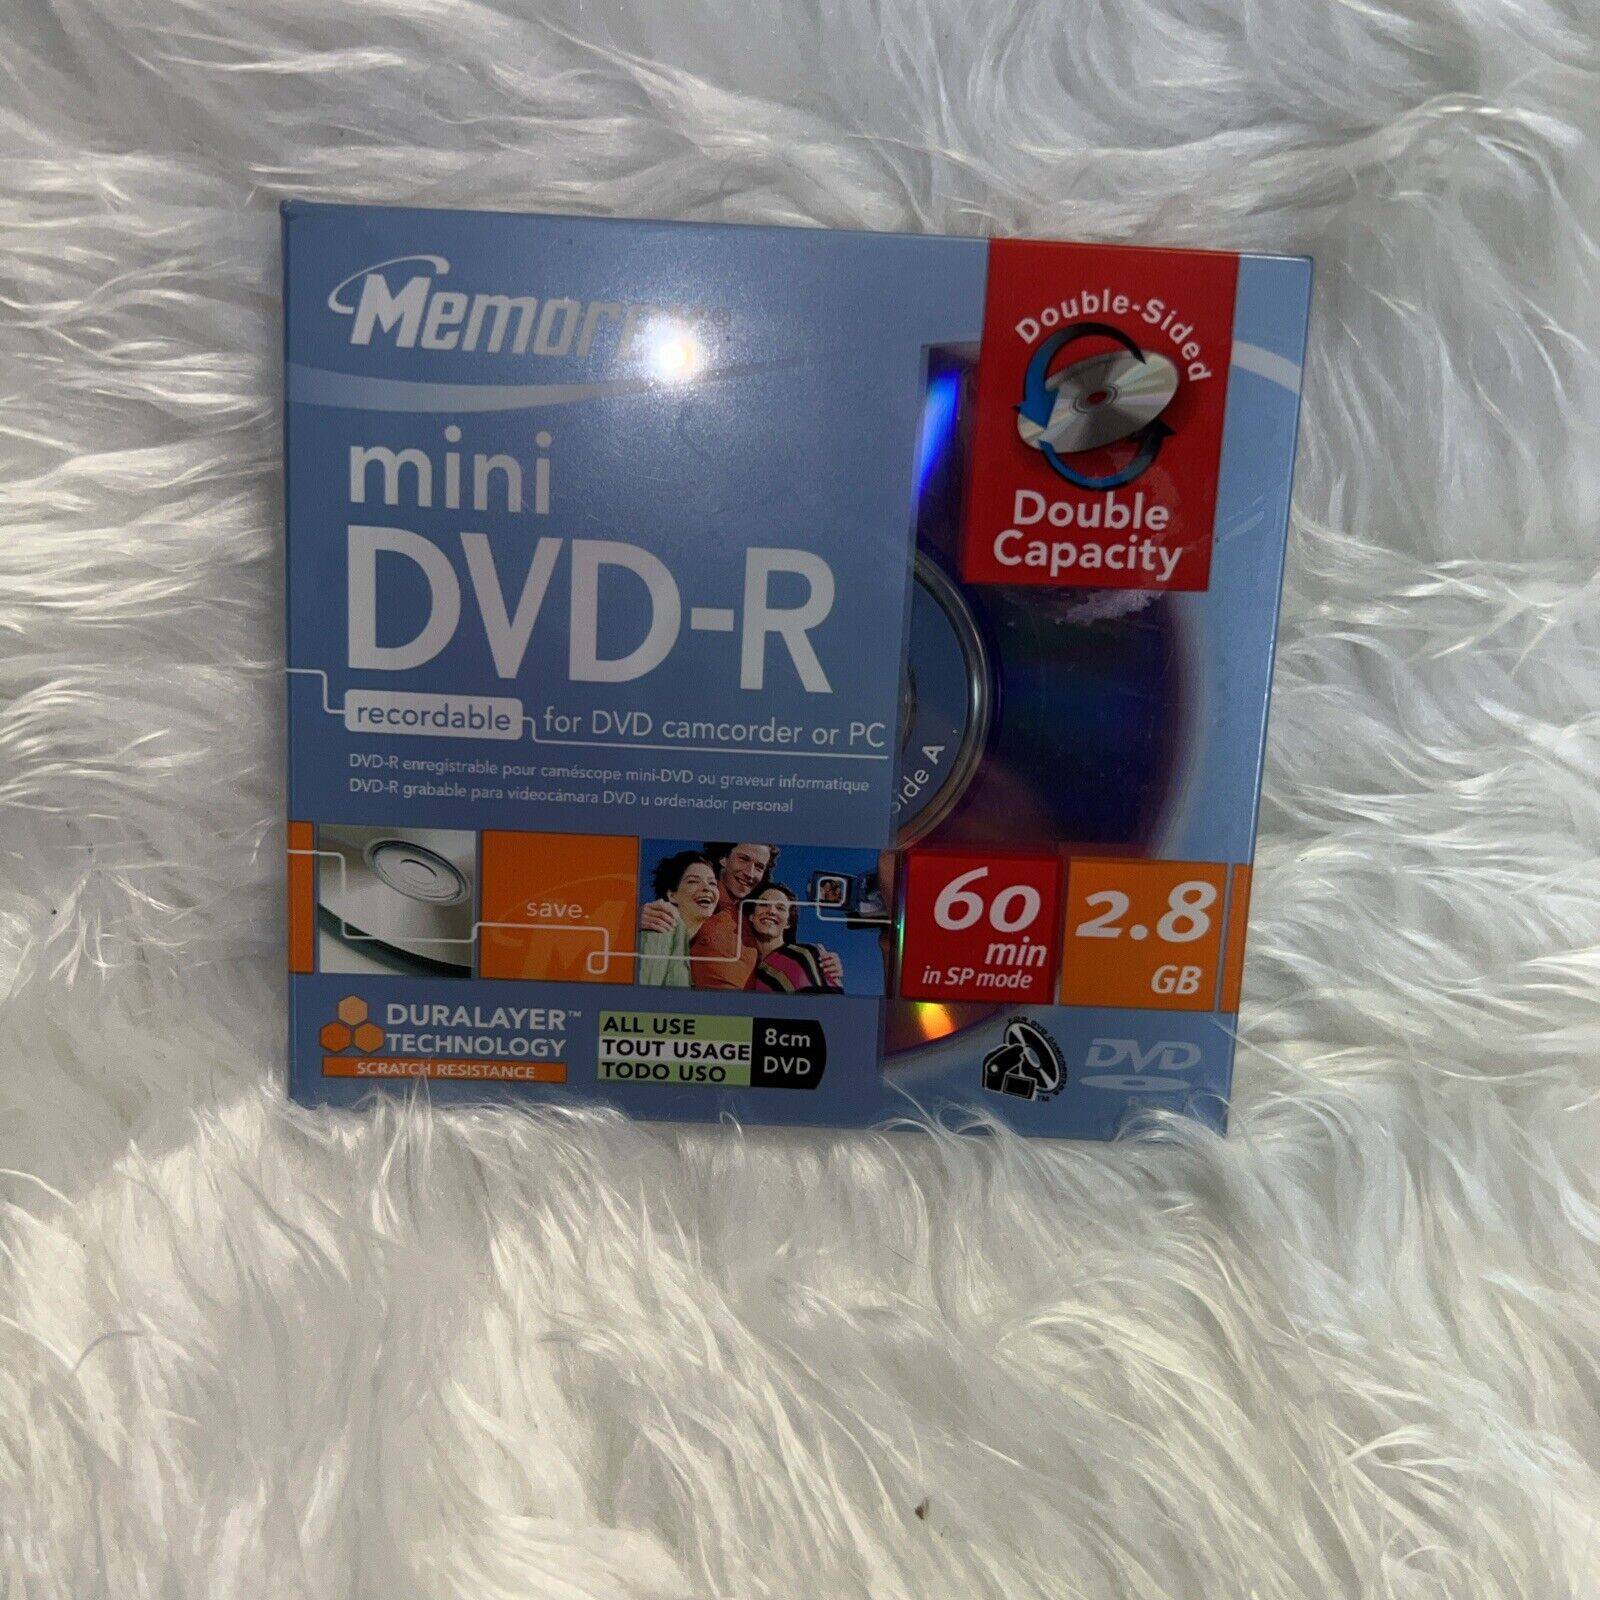 Memorex Mini DVD-R 4X 2.8 GB 60Min NEW, Sealed Double Sided Double Capacity